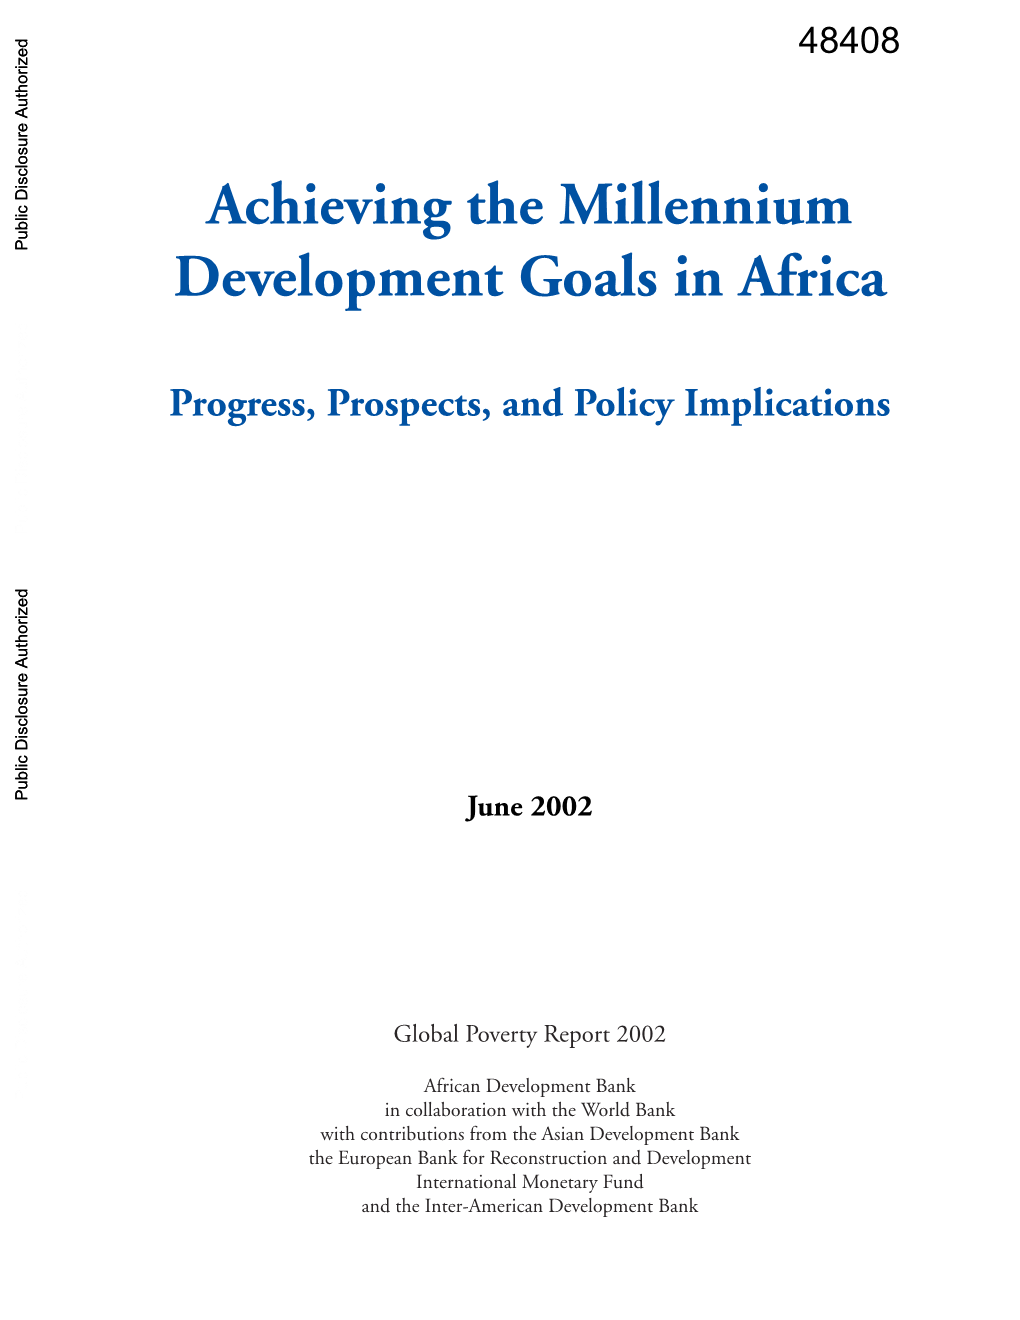 The Cost of Attaining the Millennium Development Goals 21